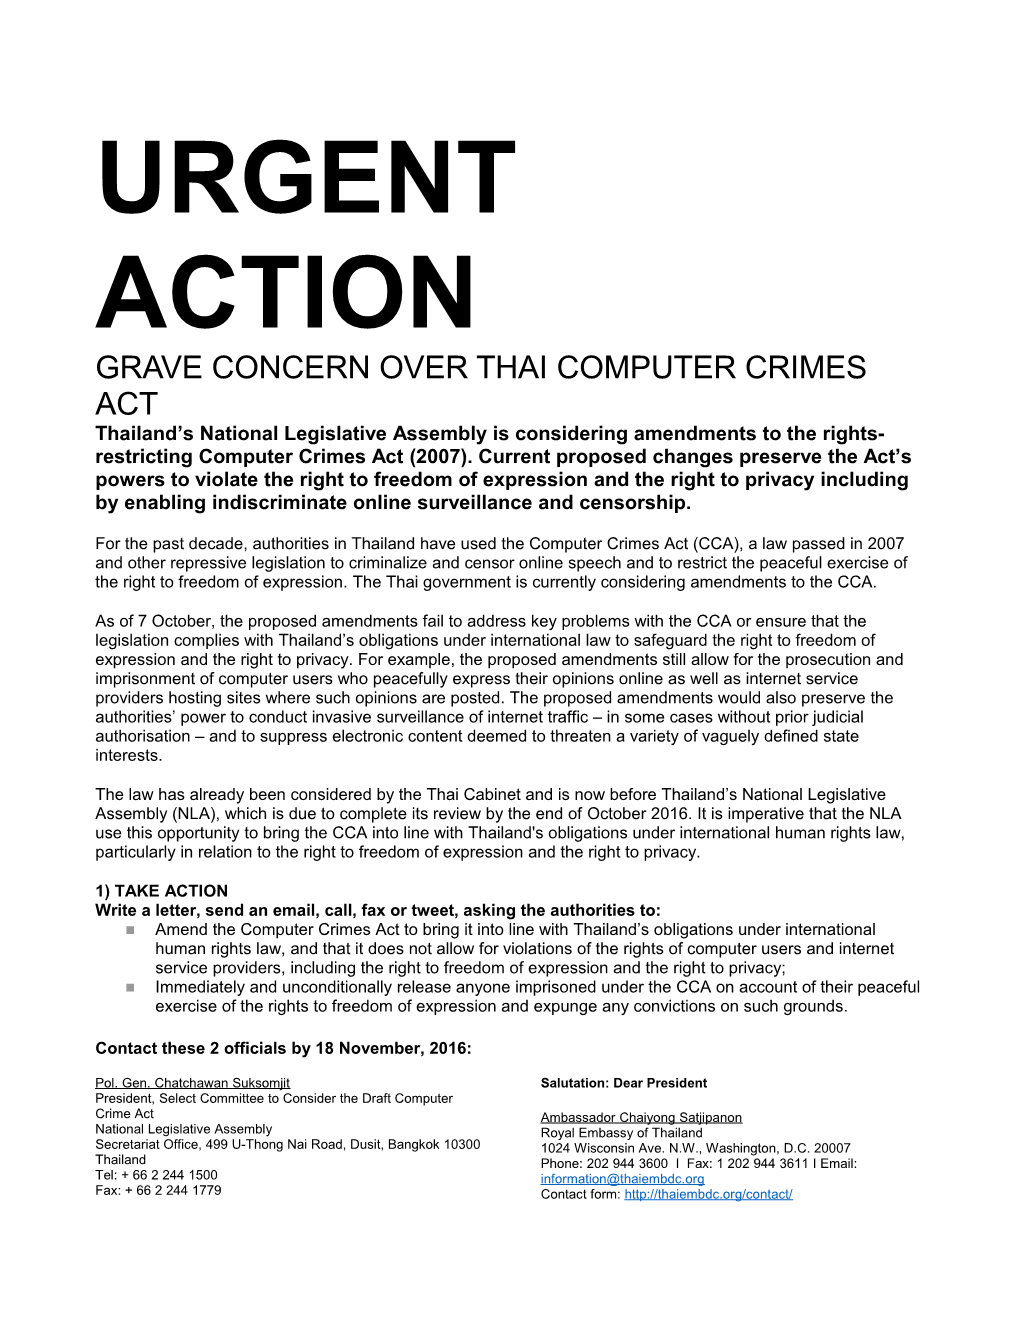 GRAVE Concern Over Thai Computer Crimes Act